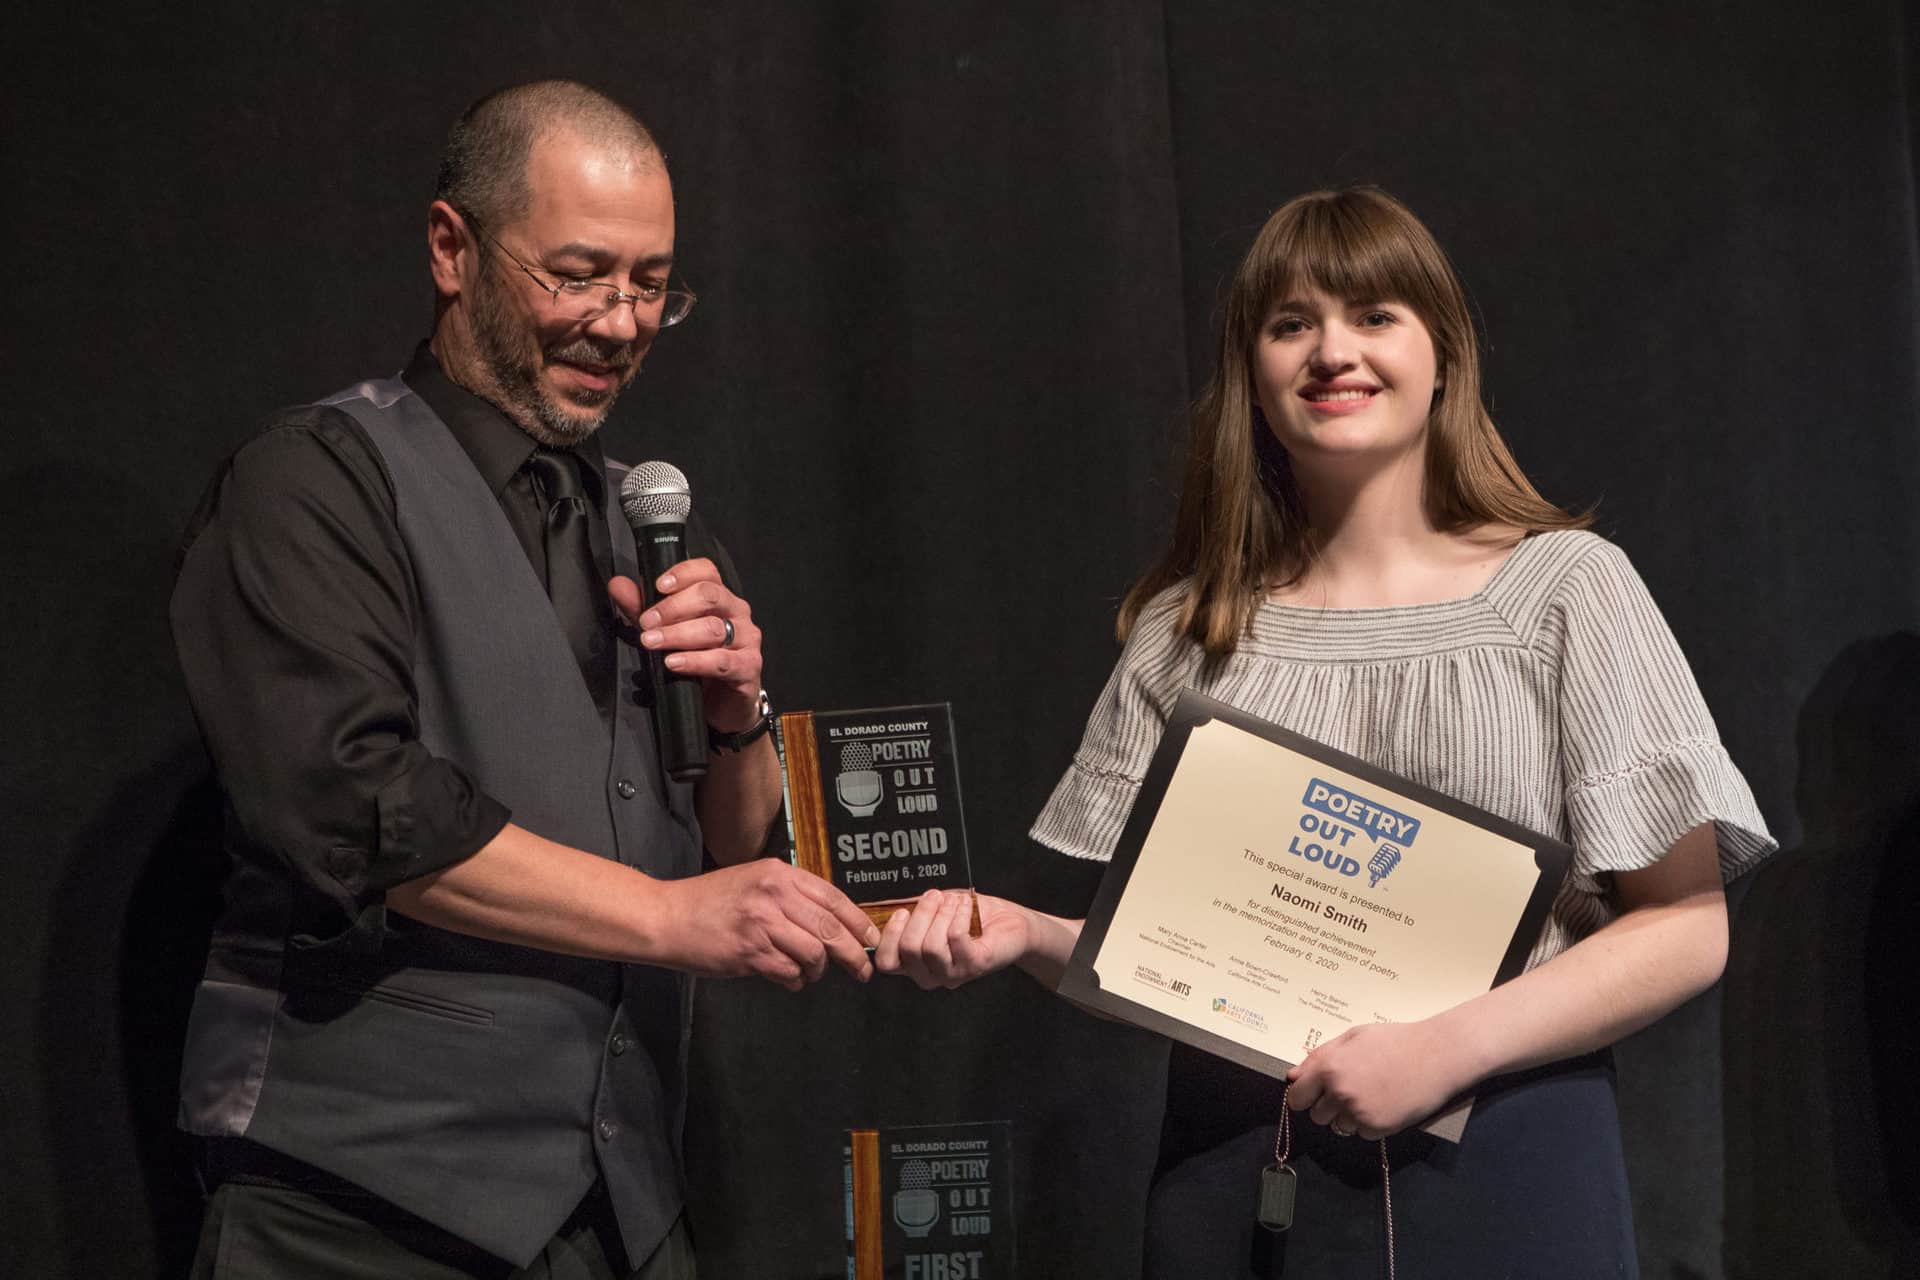 Naomi Smith receives her Second Place Award from Andrew Vonderschmitt